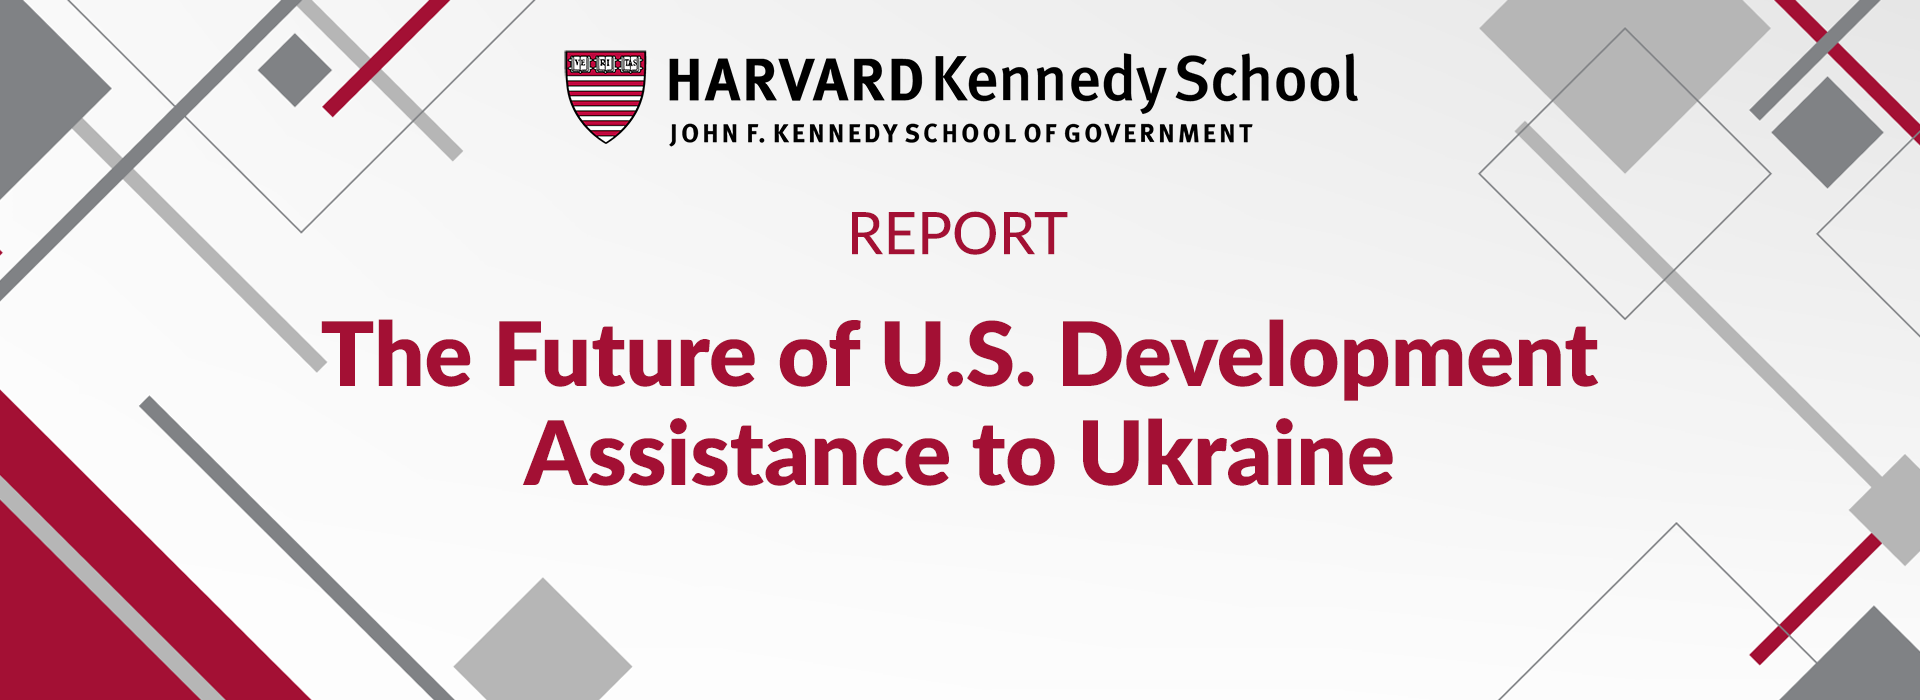 The Future of U.S. Development Assistance to Ukraine – Harvard Kennedy School Report